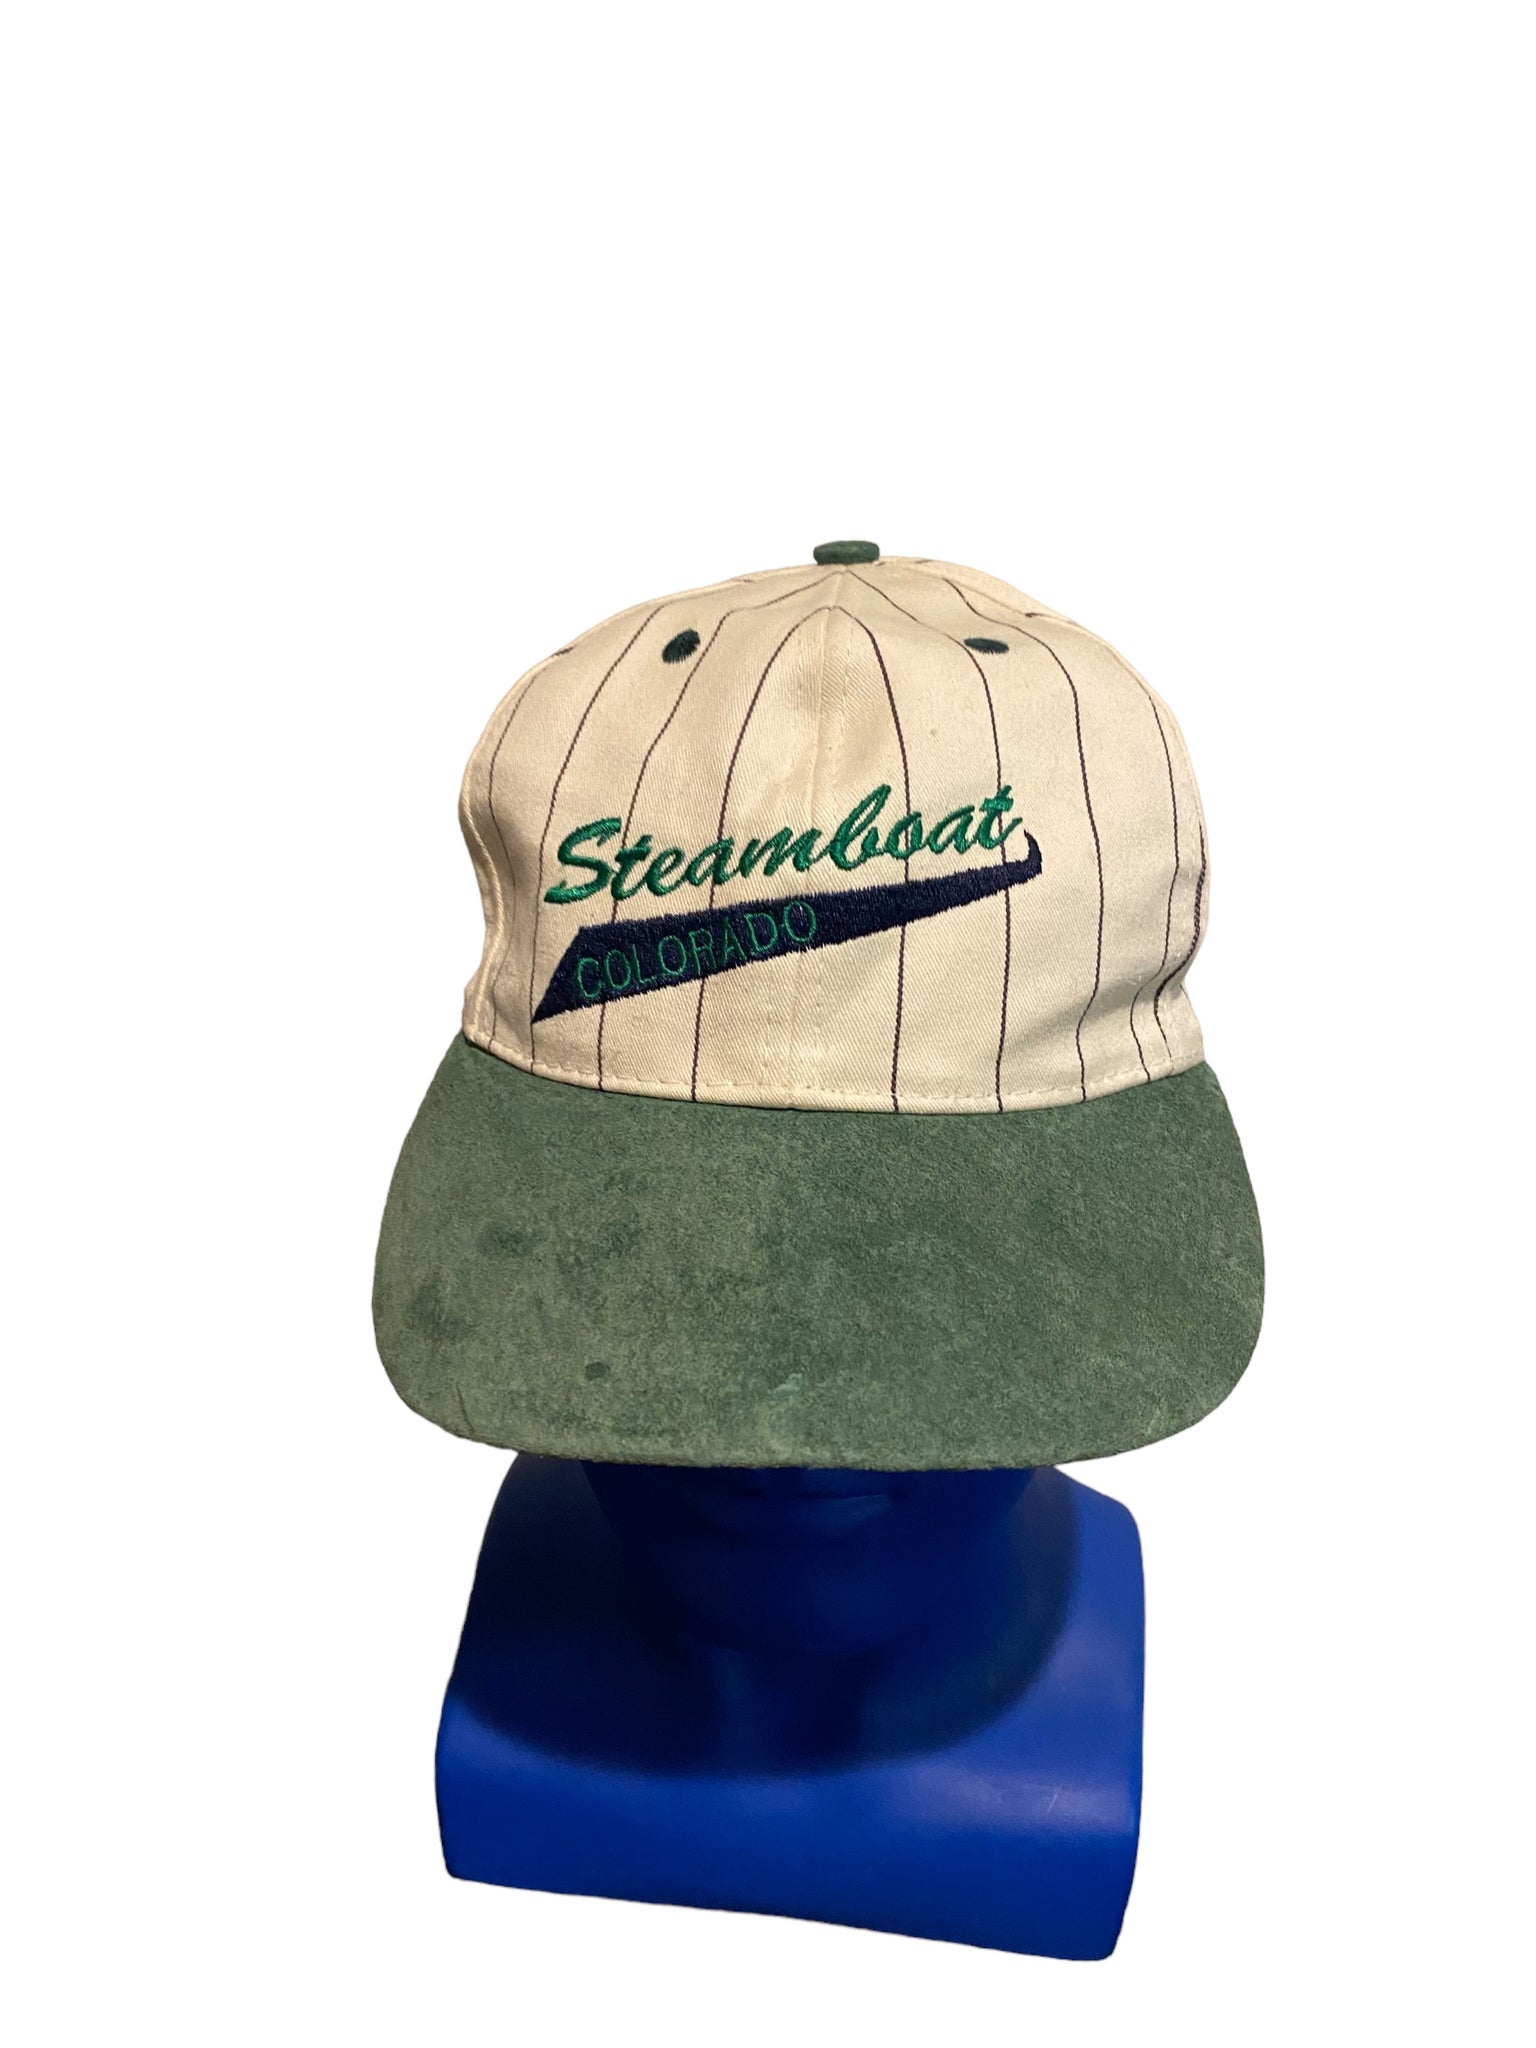 Vintage Stramboat Colorado Embroidered Script Pinstripe W Green Suede Brim Hat